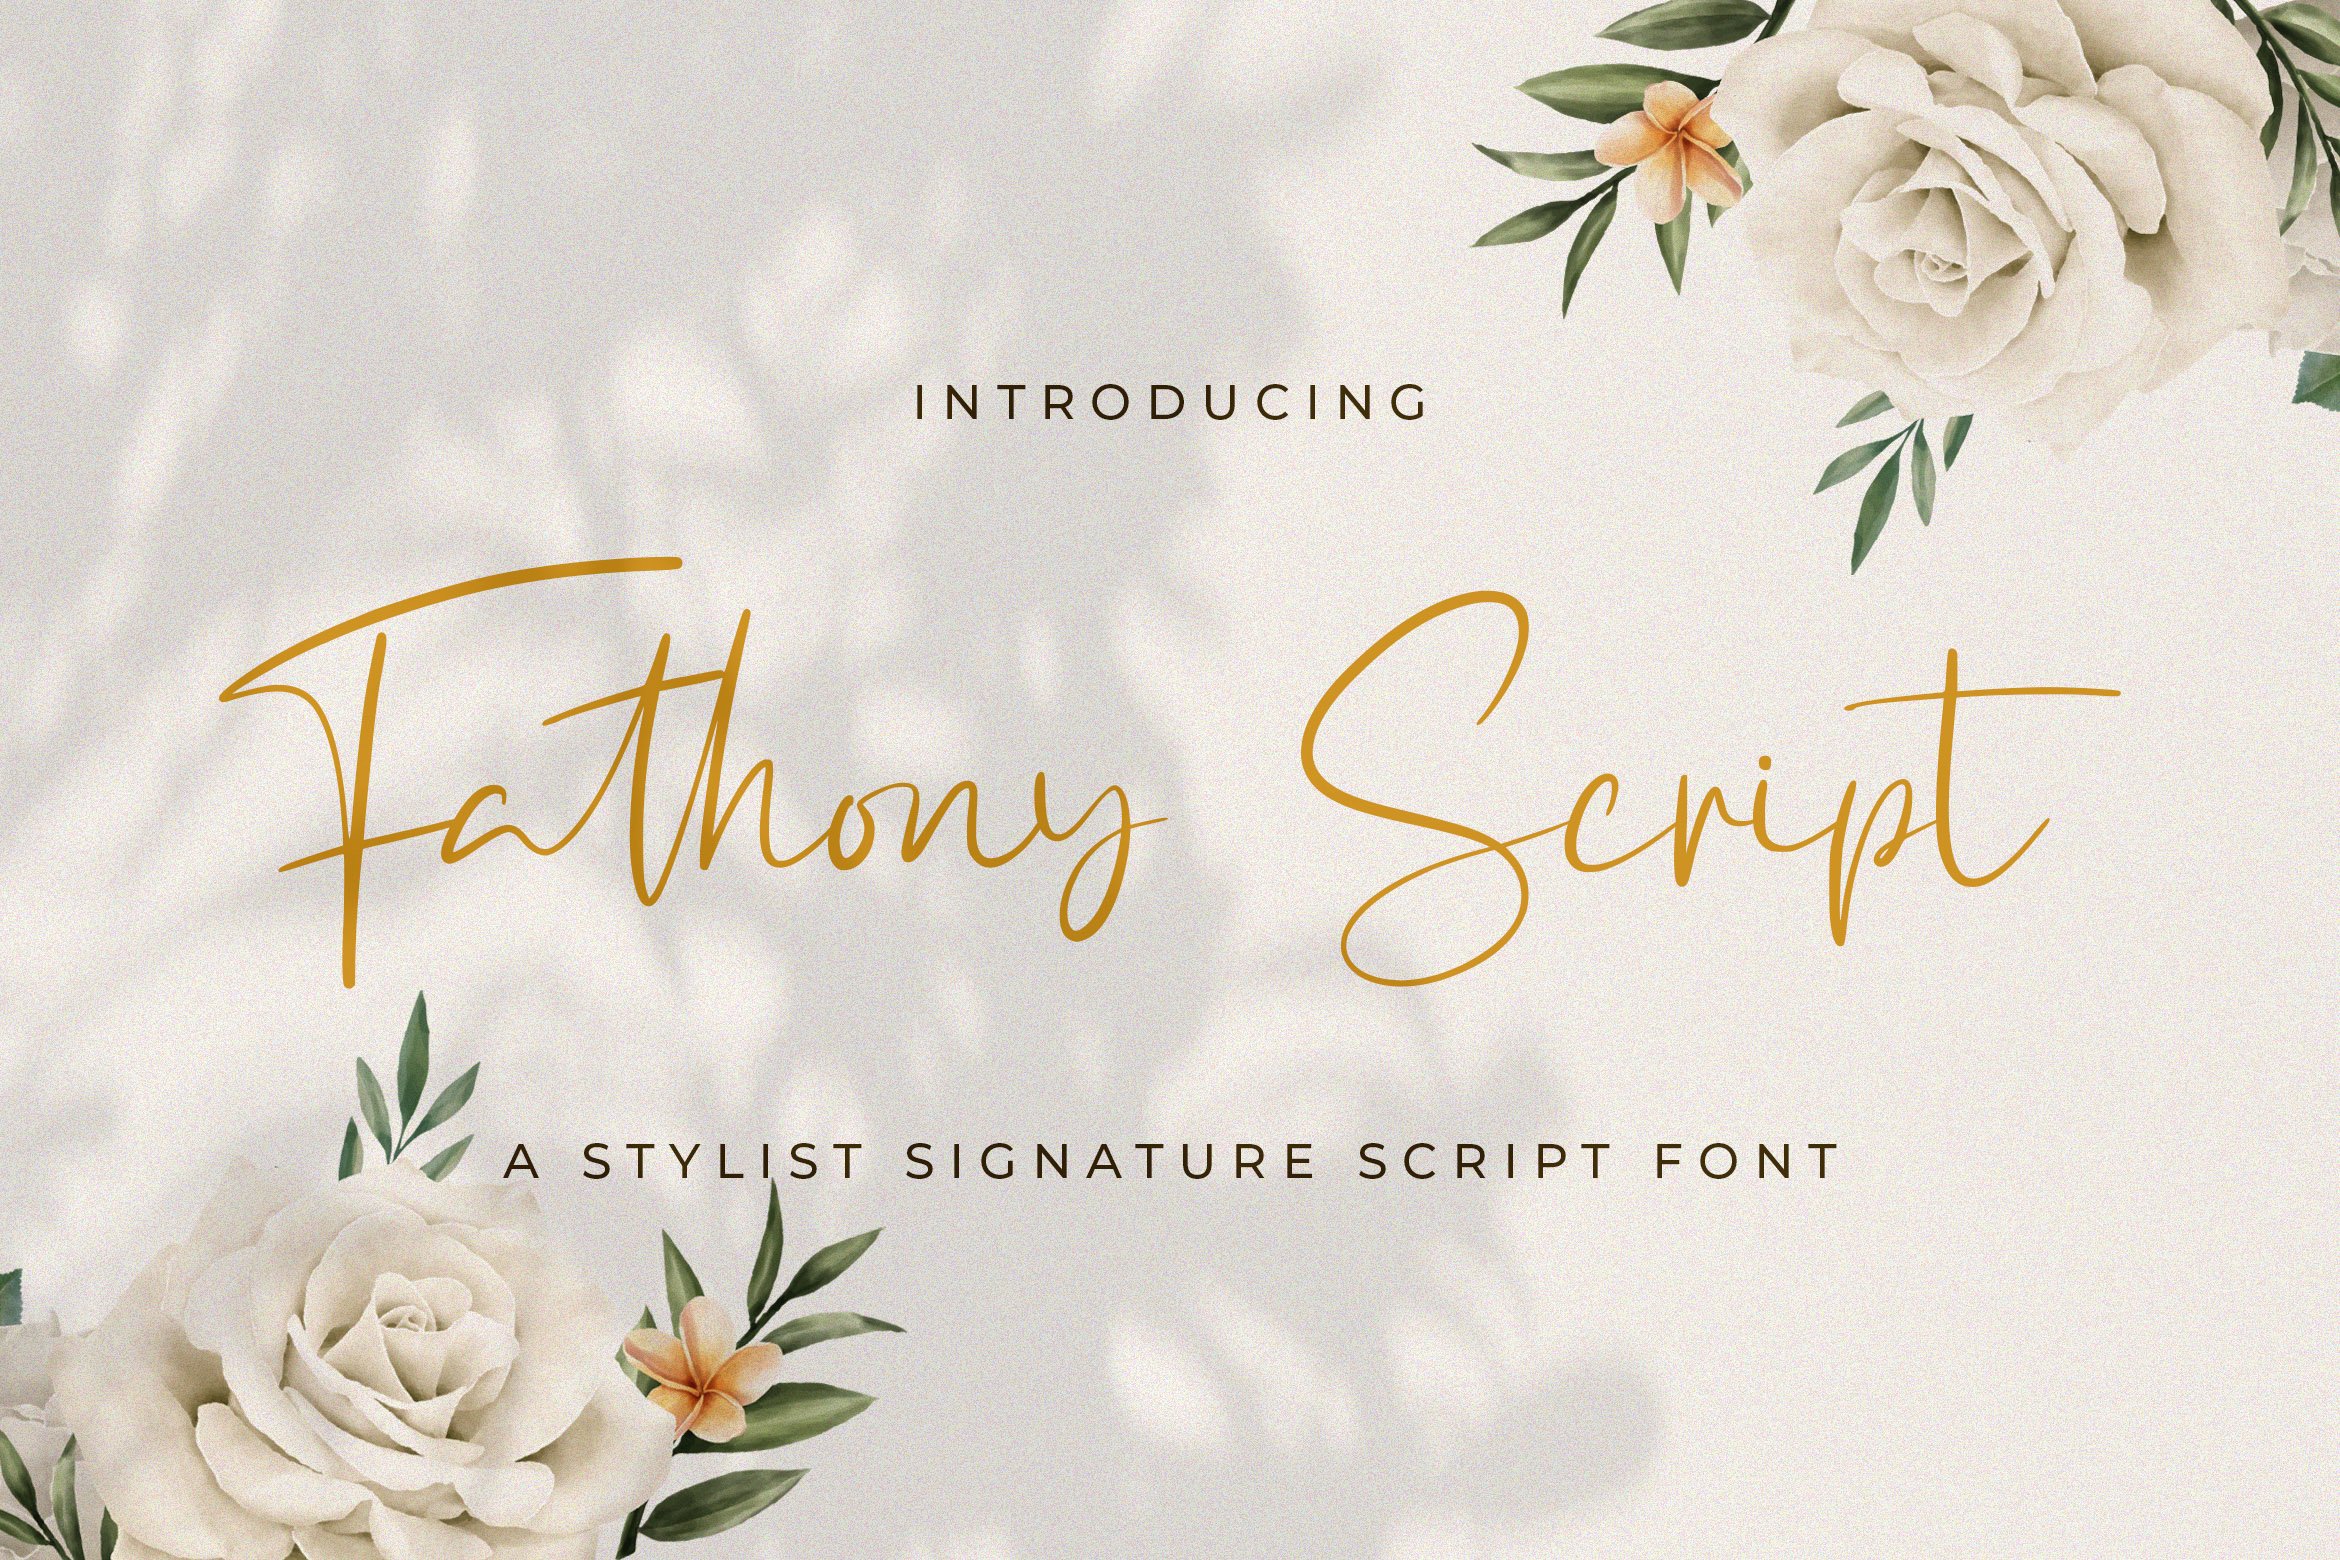 Fathony Script - Handwritten Font cover image.